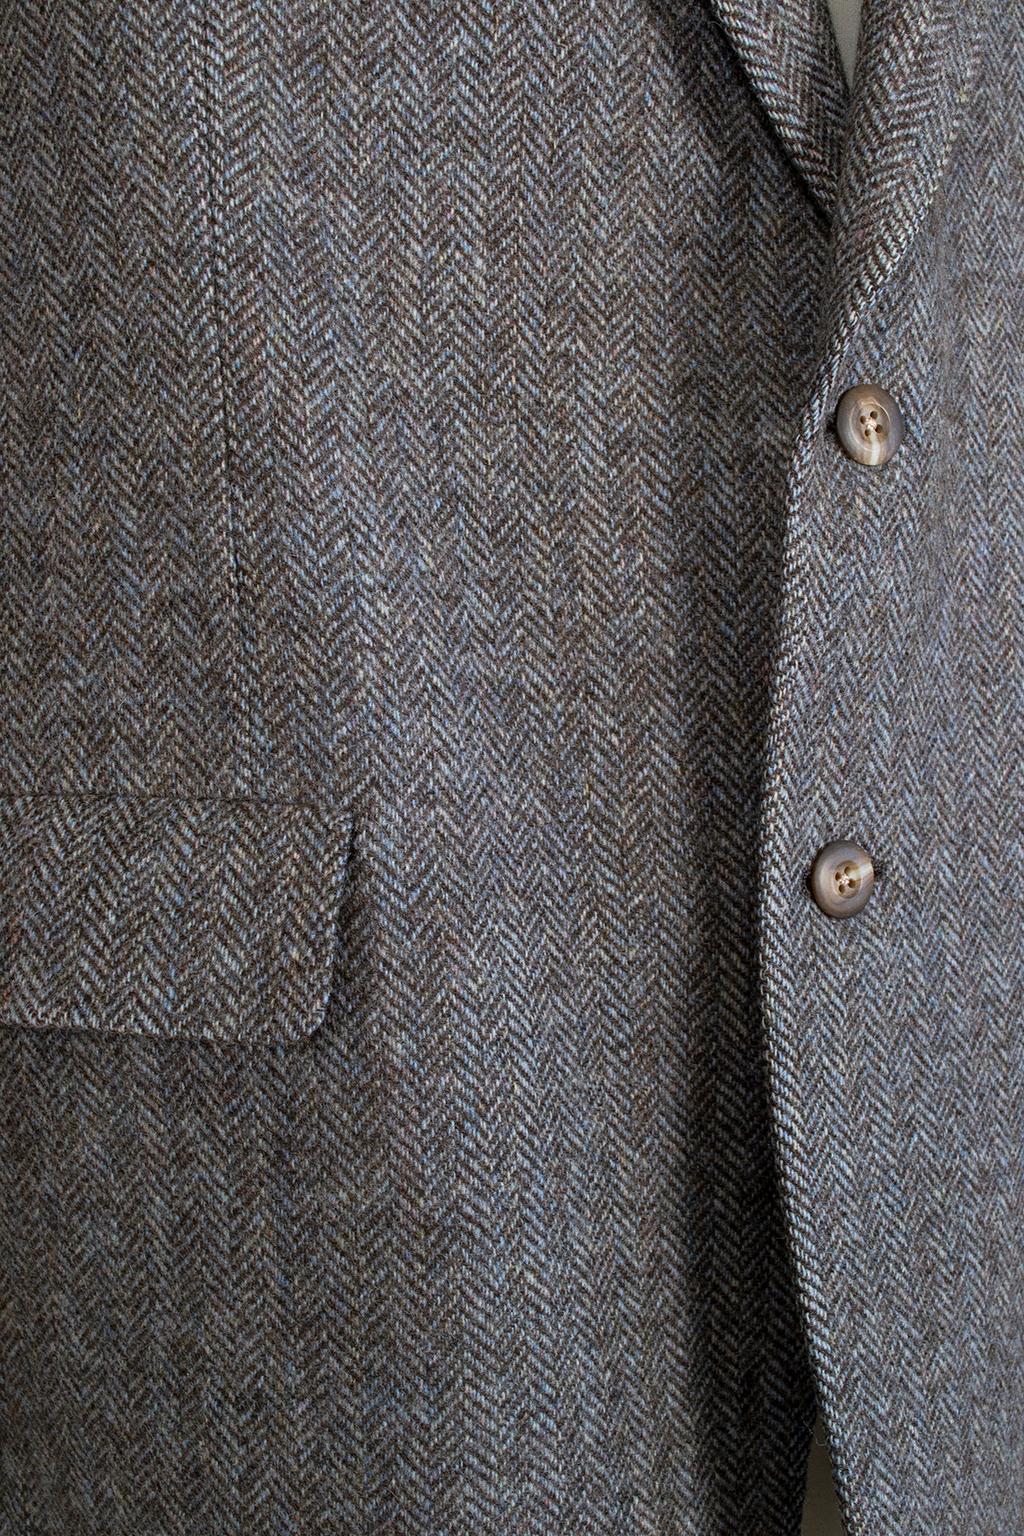 Men’s Christian Dior 2-Button Gray-Blue Herringbone Sport Jacket- 42-44 L, 1970s 2